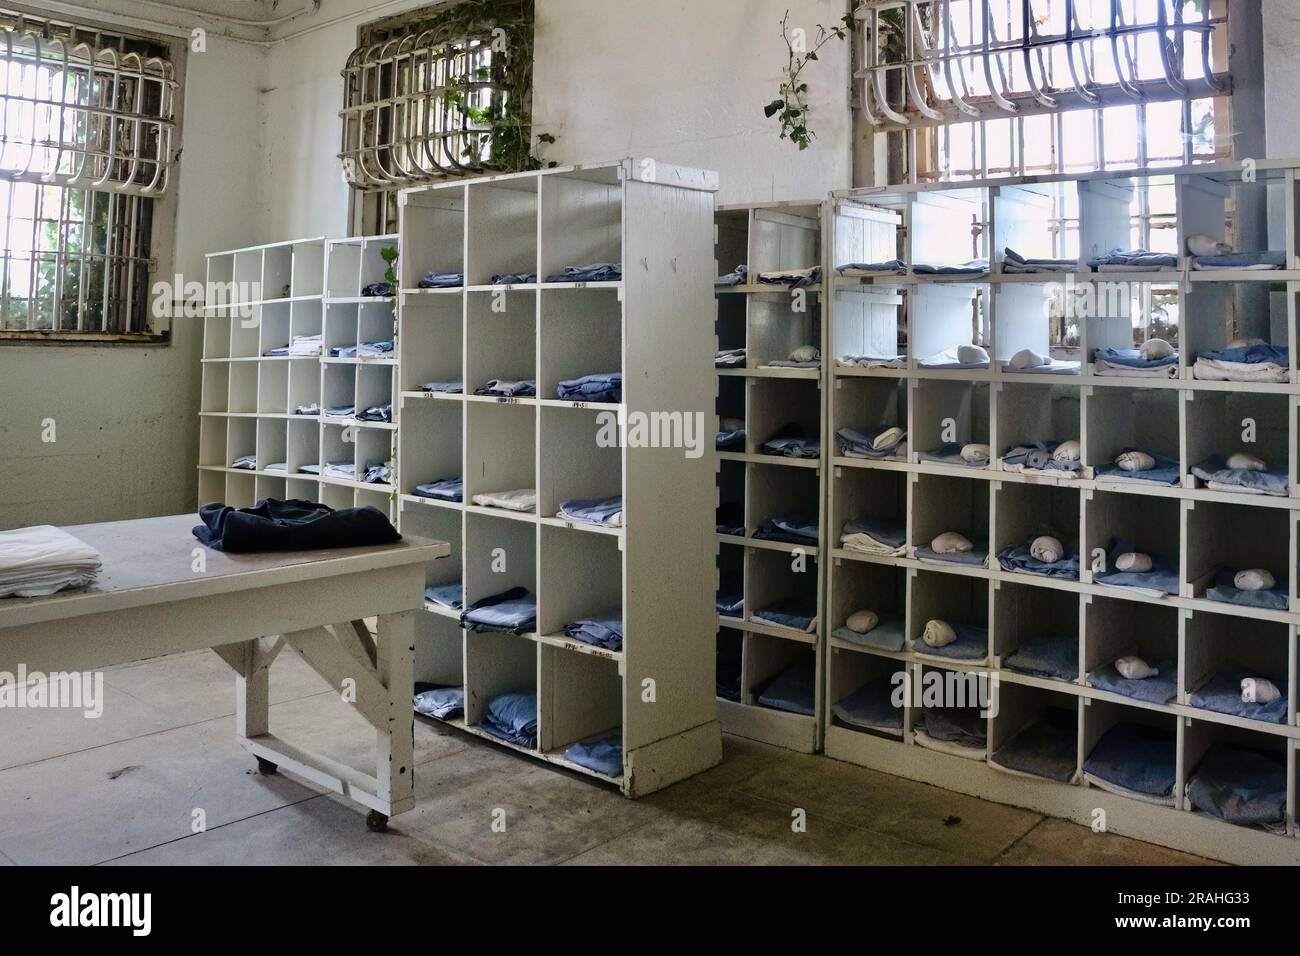 Laundry room with shelves of uniforms and linen Alcatraz Federal Penitentiary Alcatraz Island San Francisco California USA Stock Photo